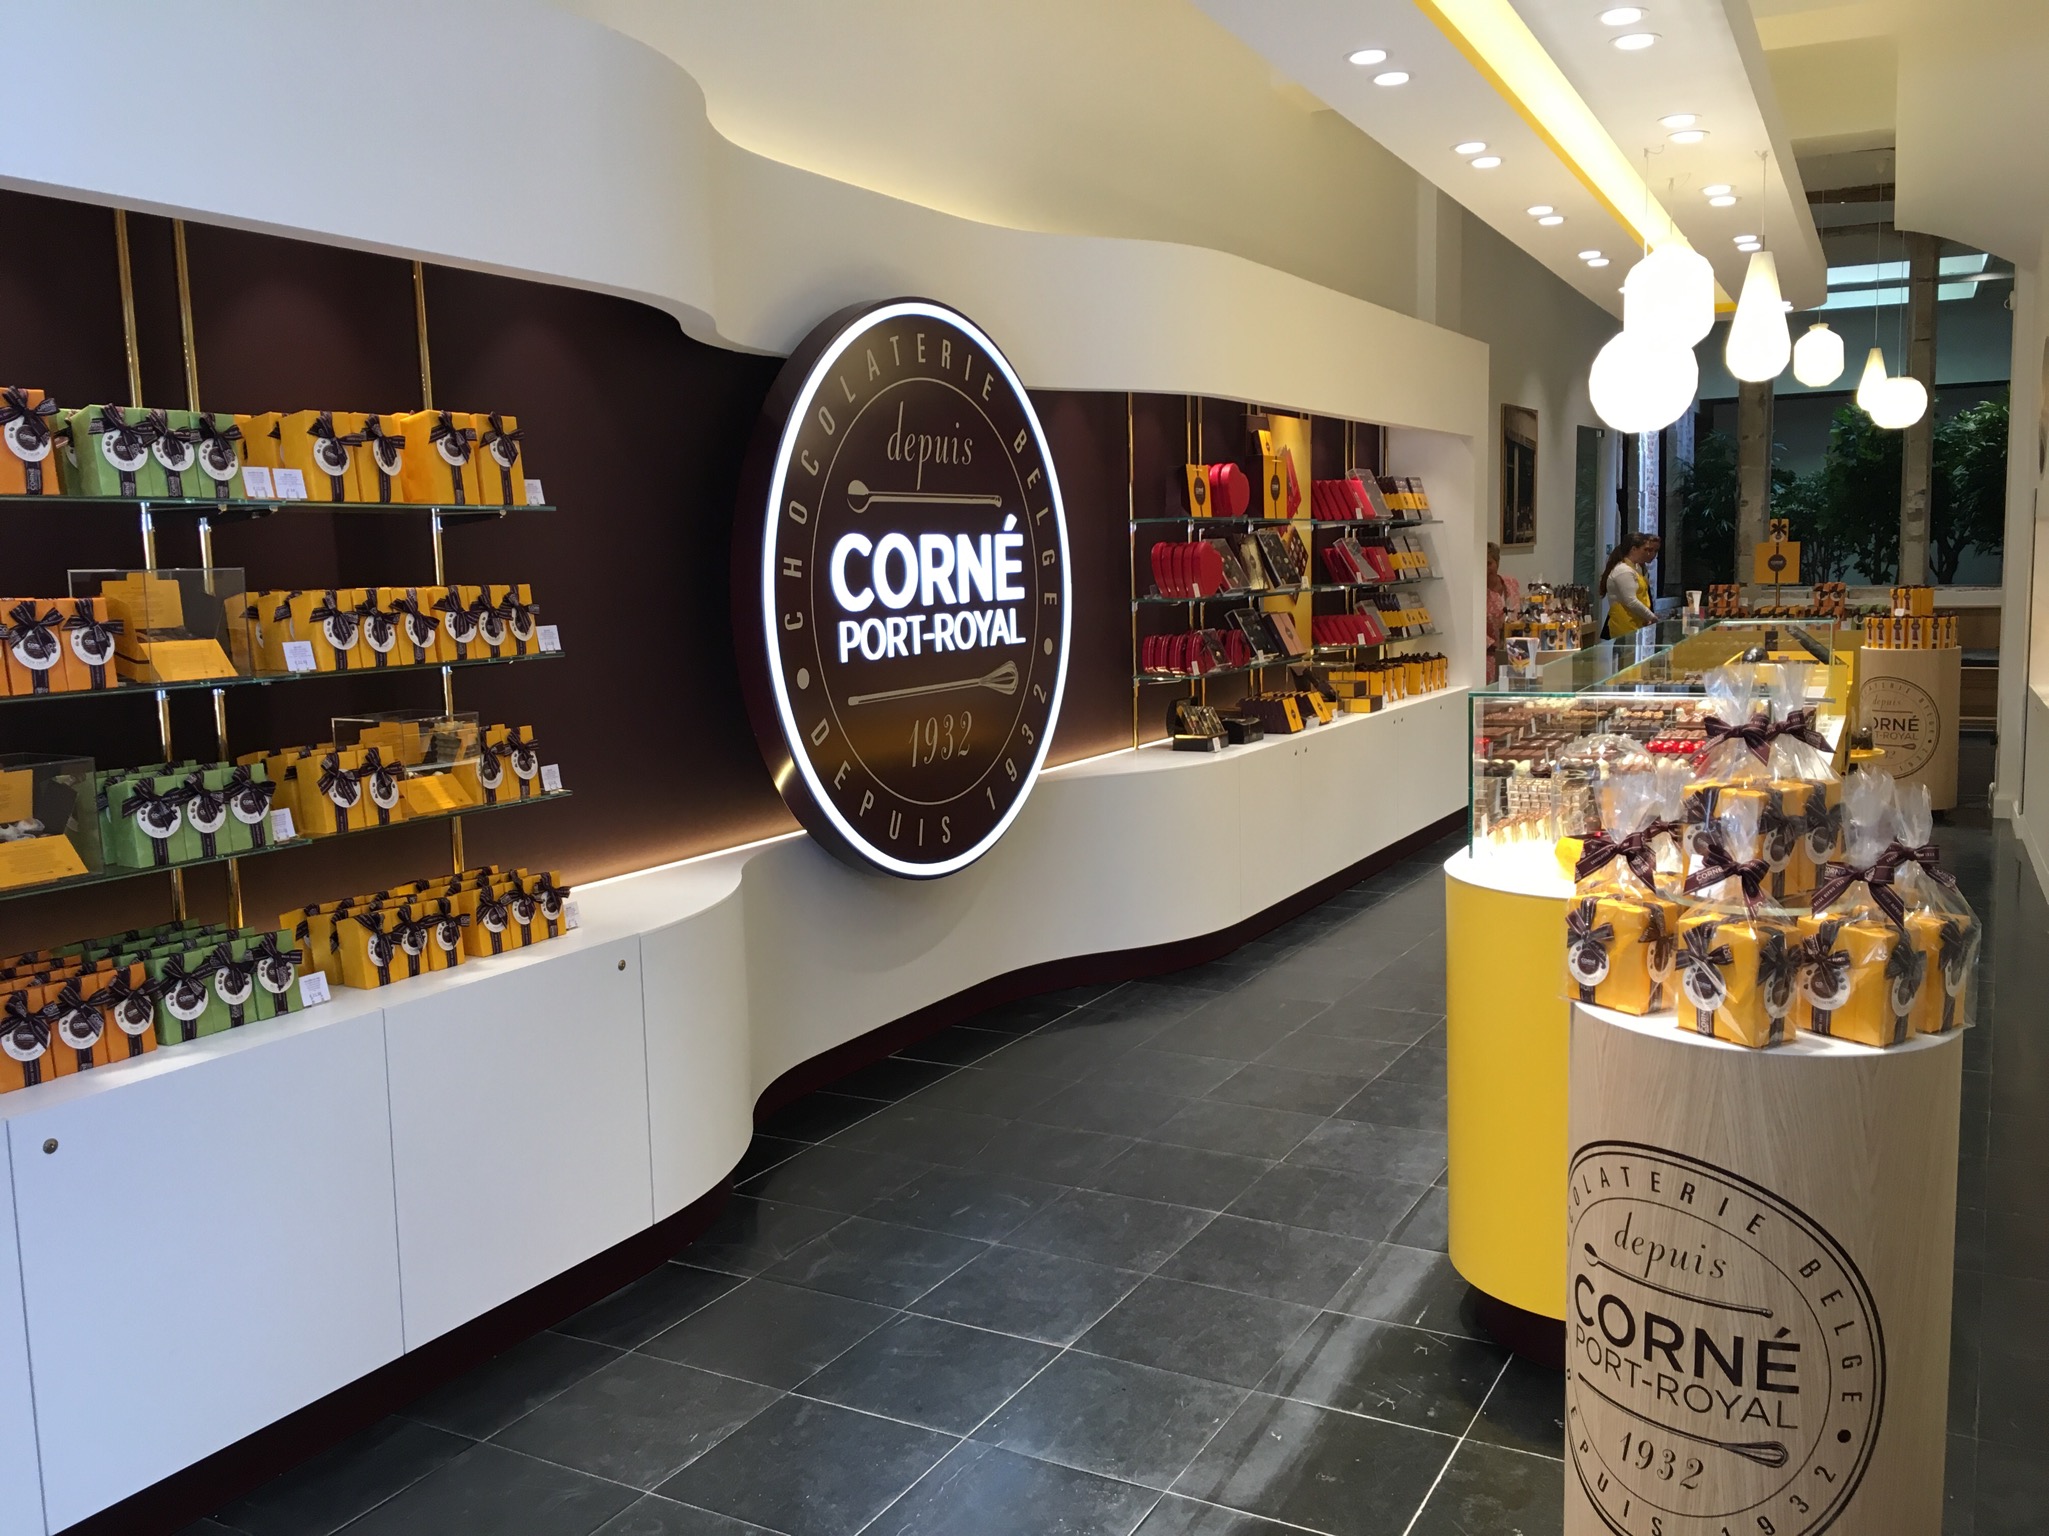 Brandimage creates the new store concept for the chocolatier Corné Port-Royal